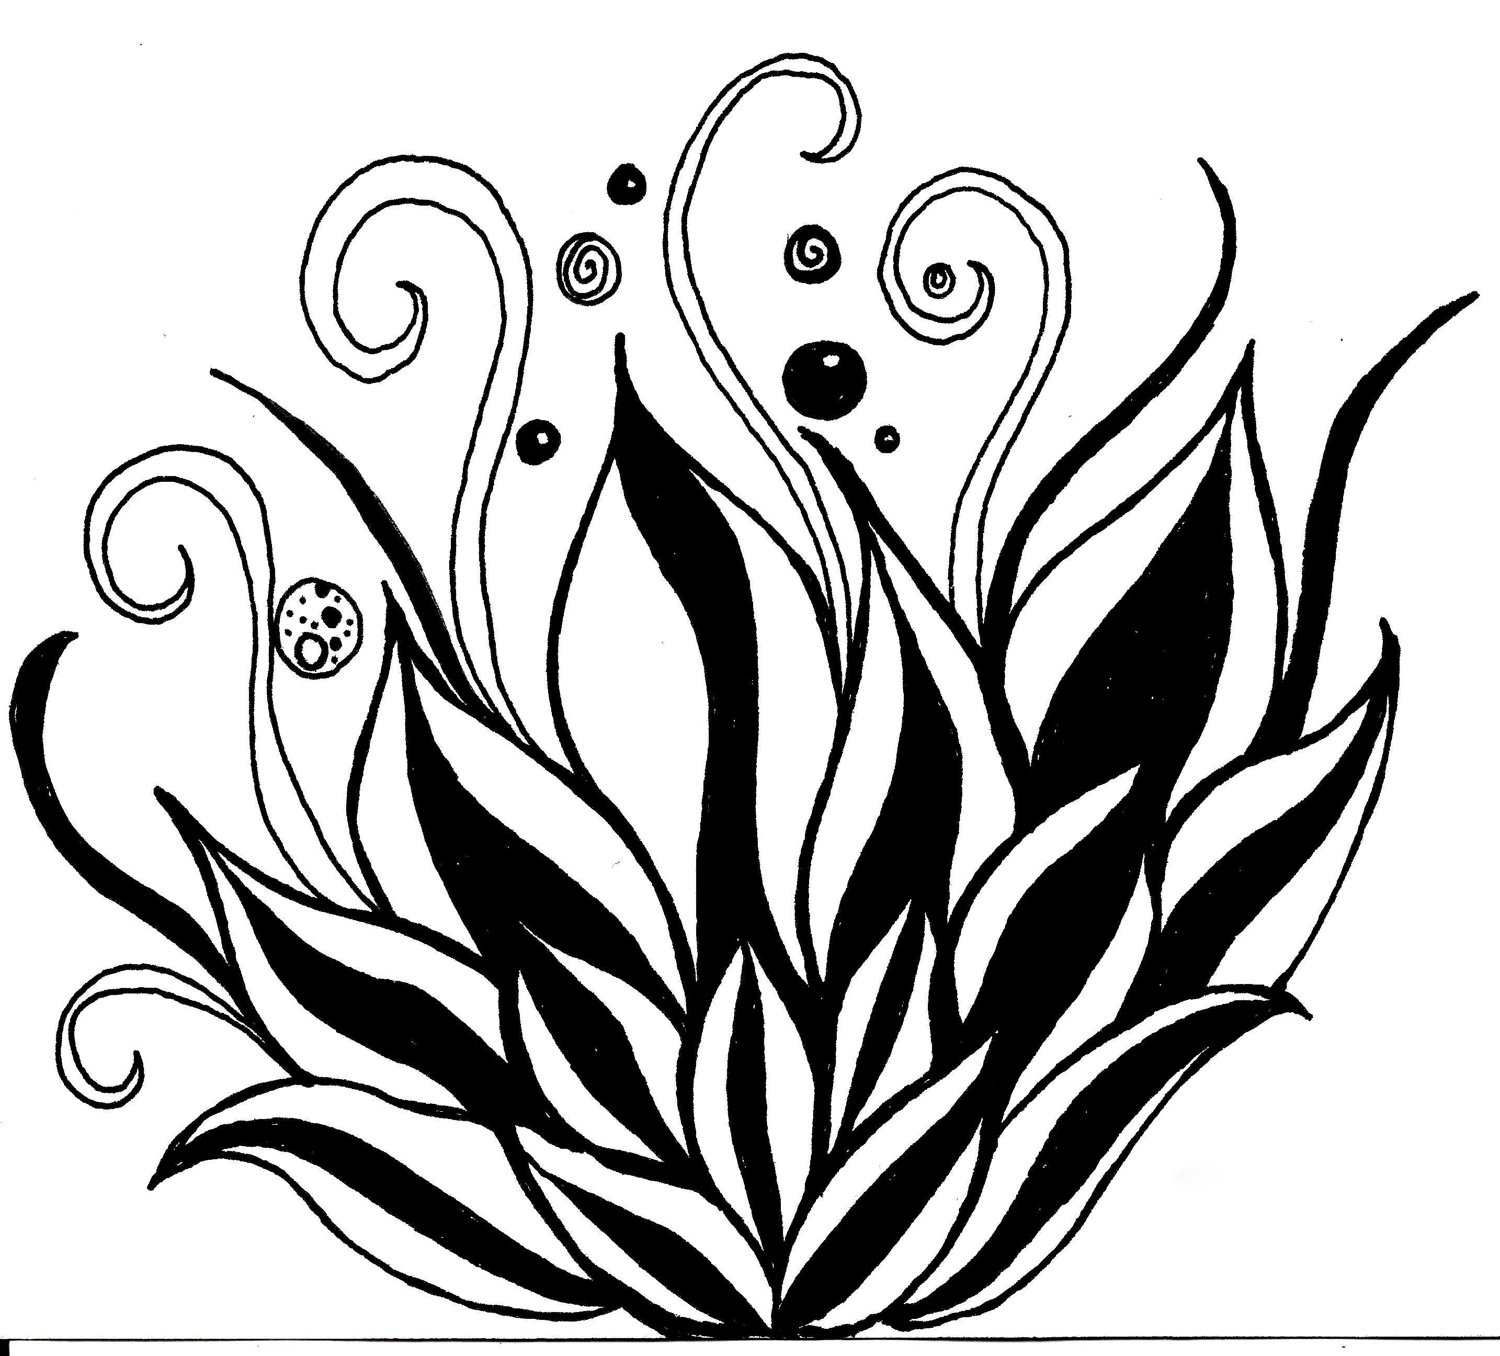 Lotus Flower Line Drawing | Free Download Clip Art | Free Clip Art ...